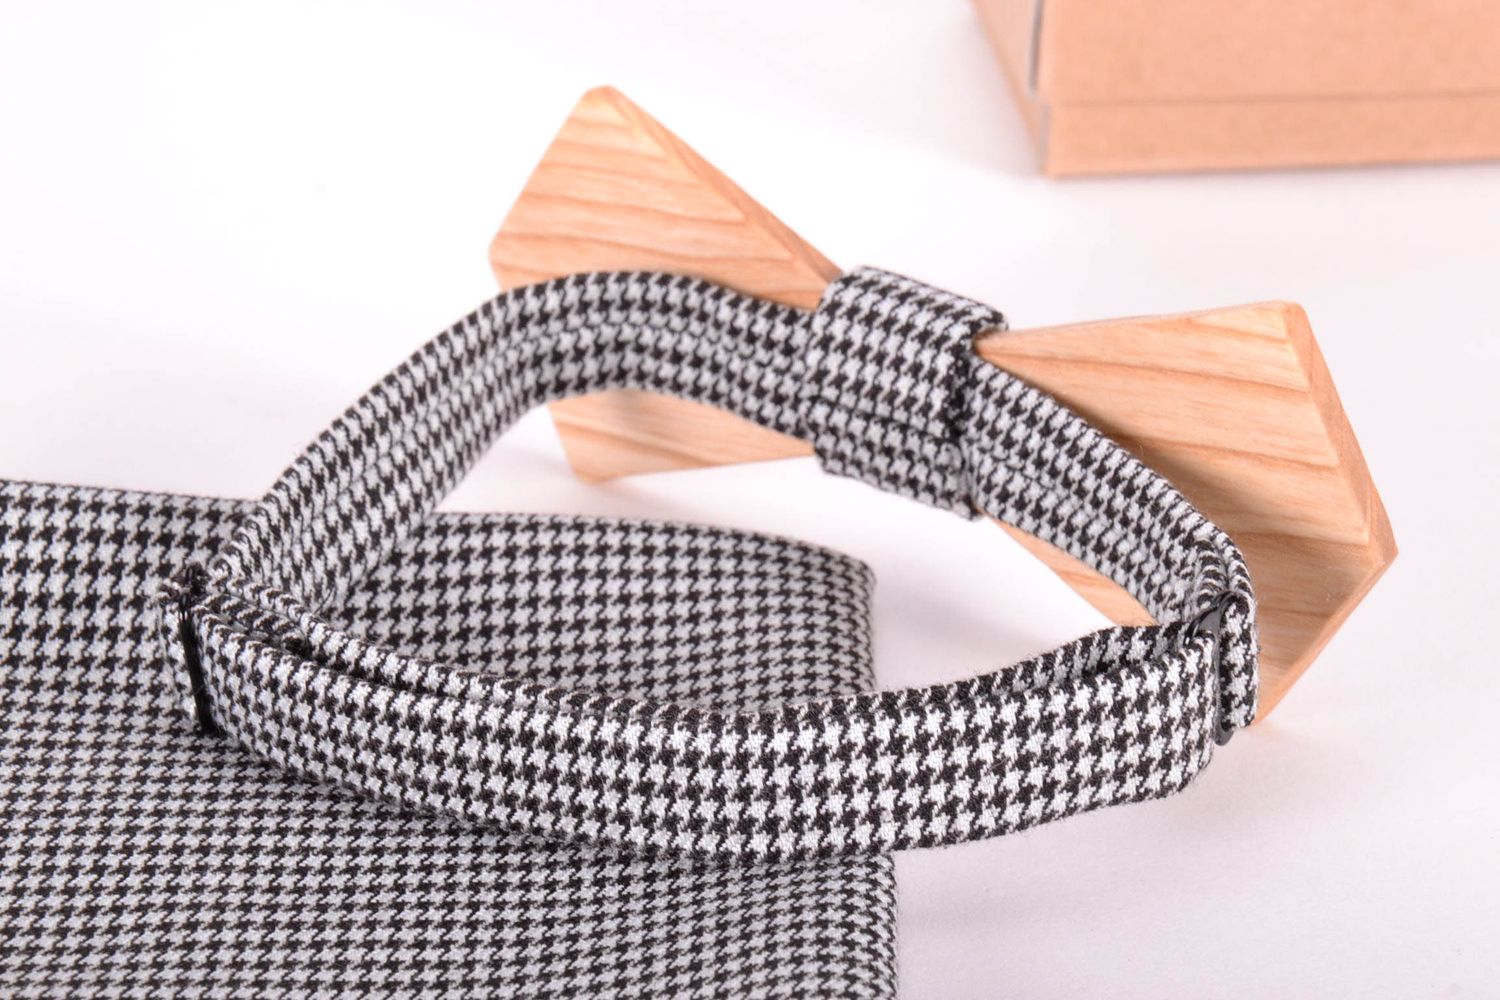 Bow tie and handkerchief in carton box photo 4